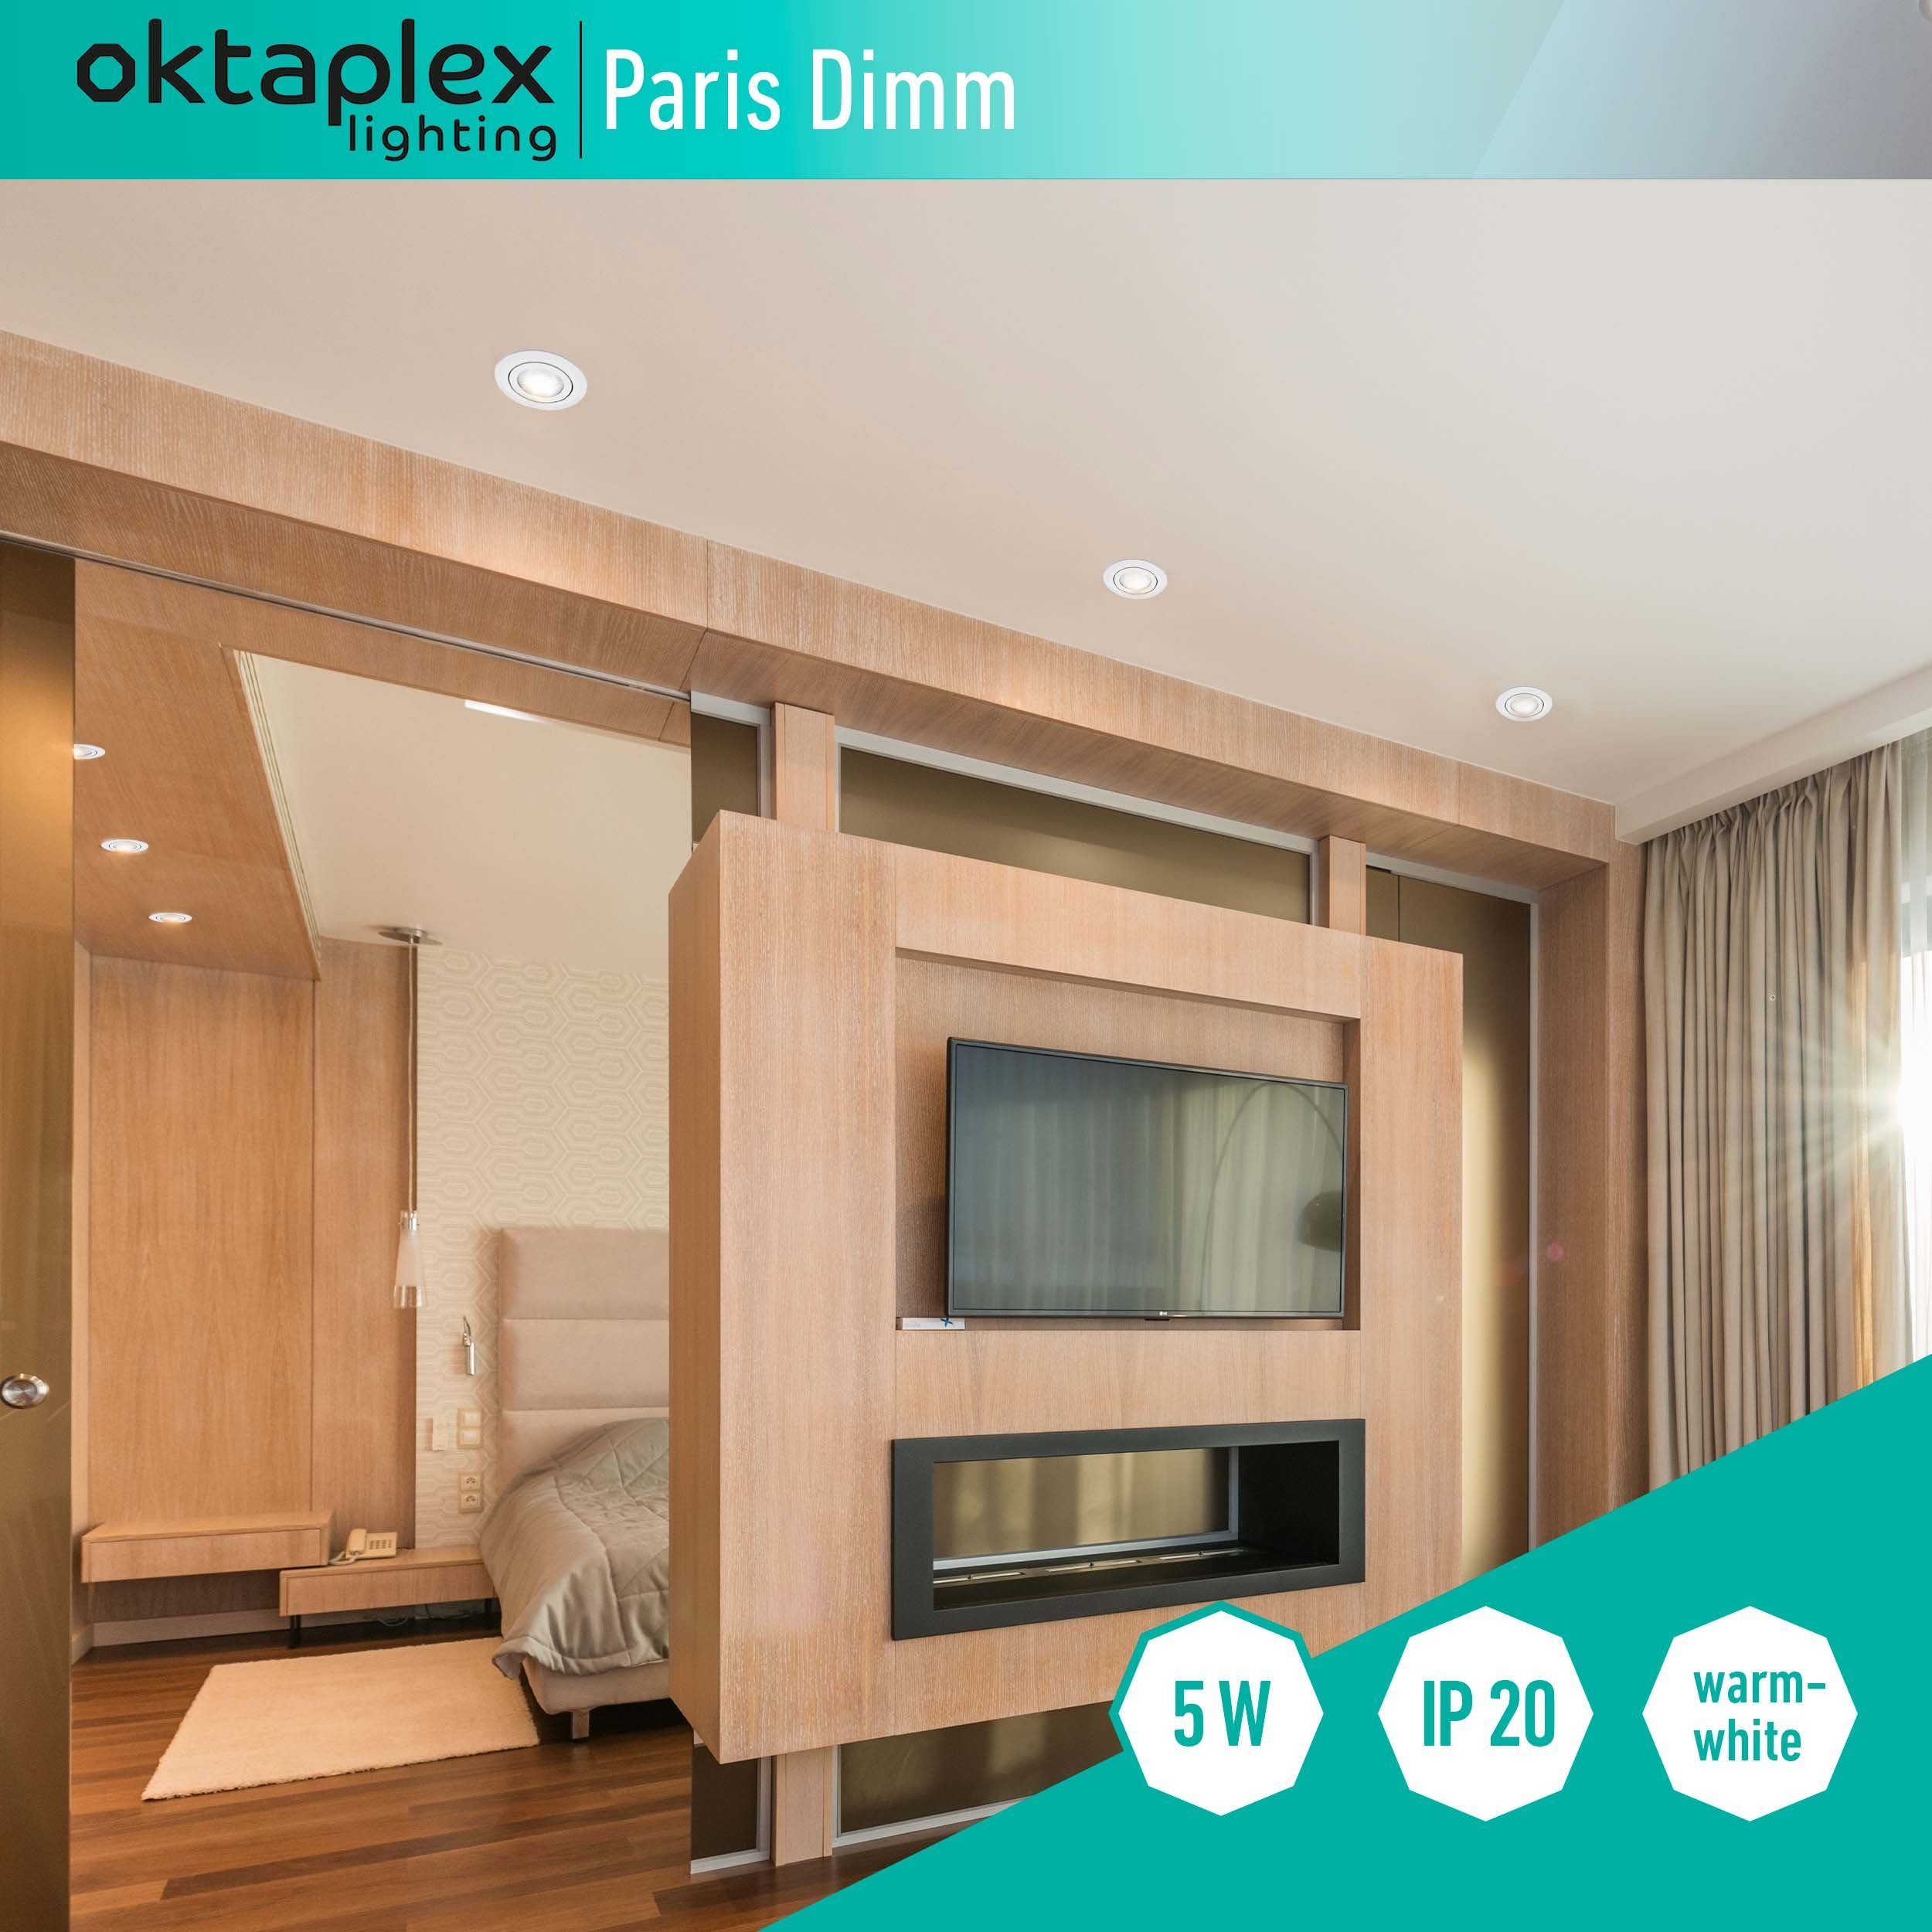 Oktaplex fest 3-Step PARIS LED dimmbar, Stufen LED Dimmer, Deckenleuchte verbaut, Einbaustrahler Oktaplex 3 lighting Warmweiß